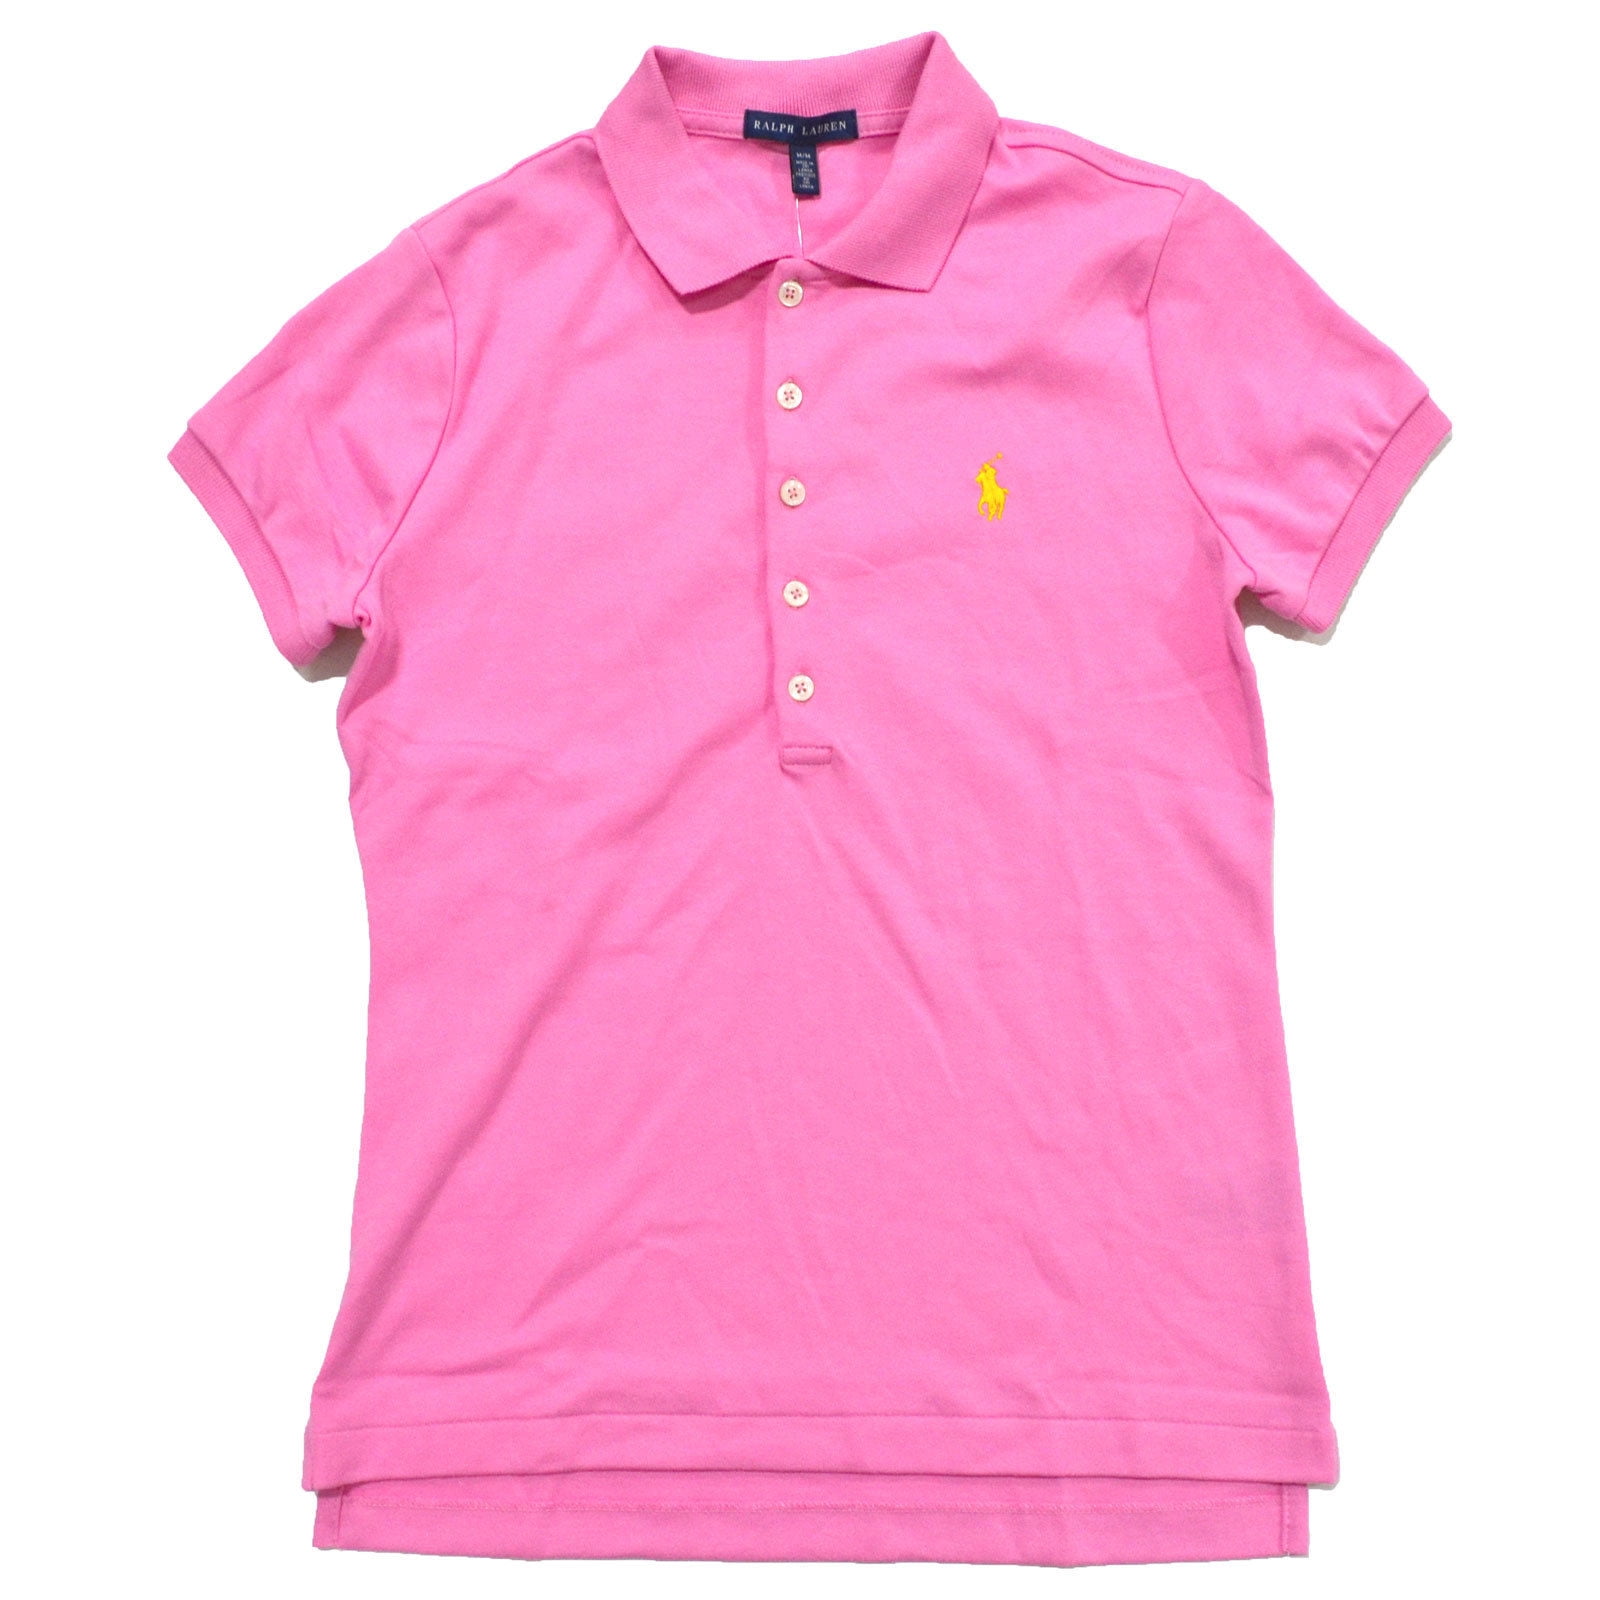 Polo Ralph Lauren Womens Classic Fit Interlock Polo Shirt (L, Pink